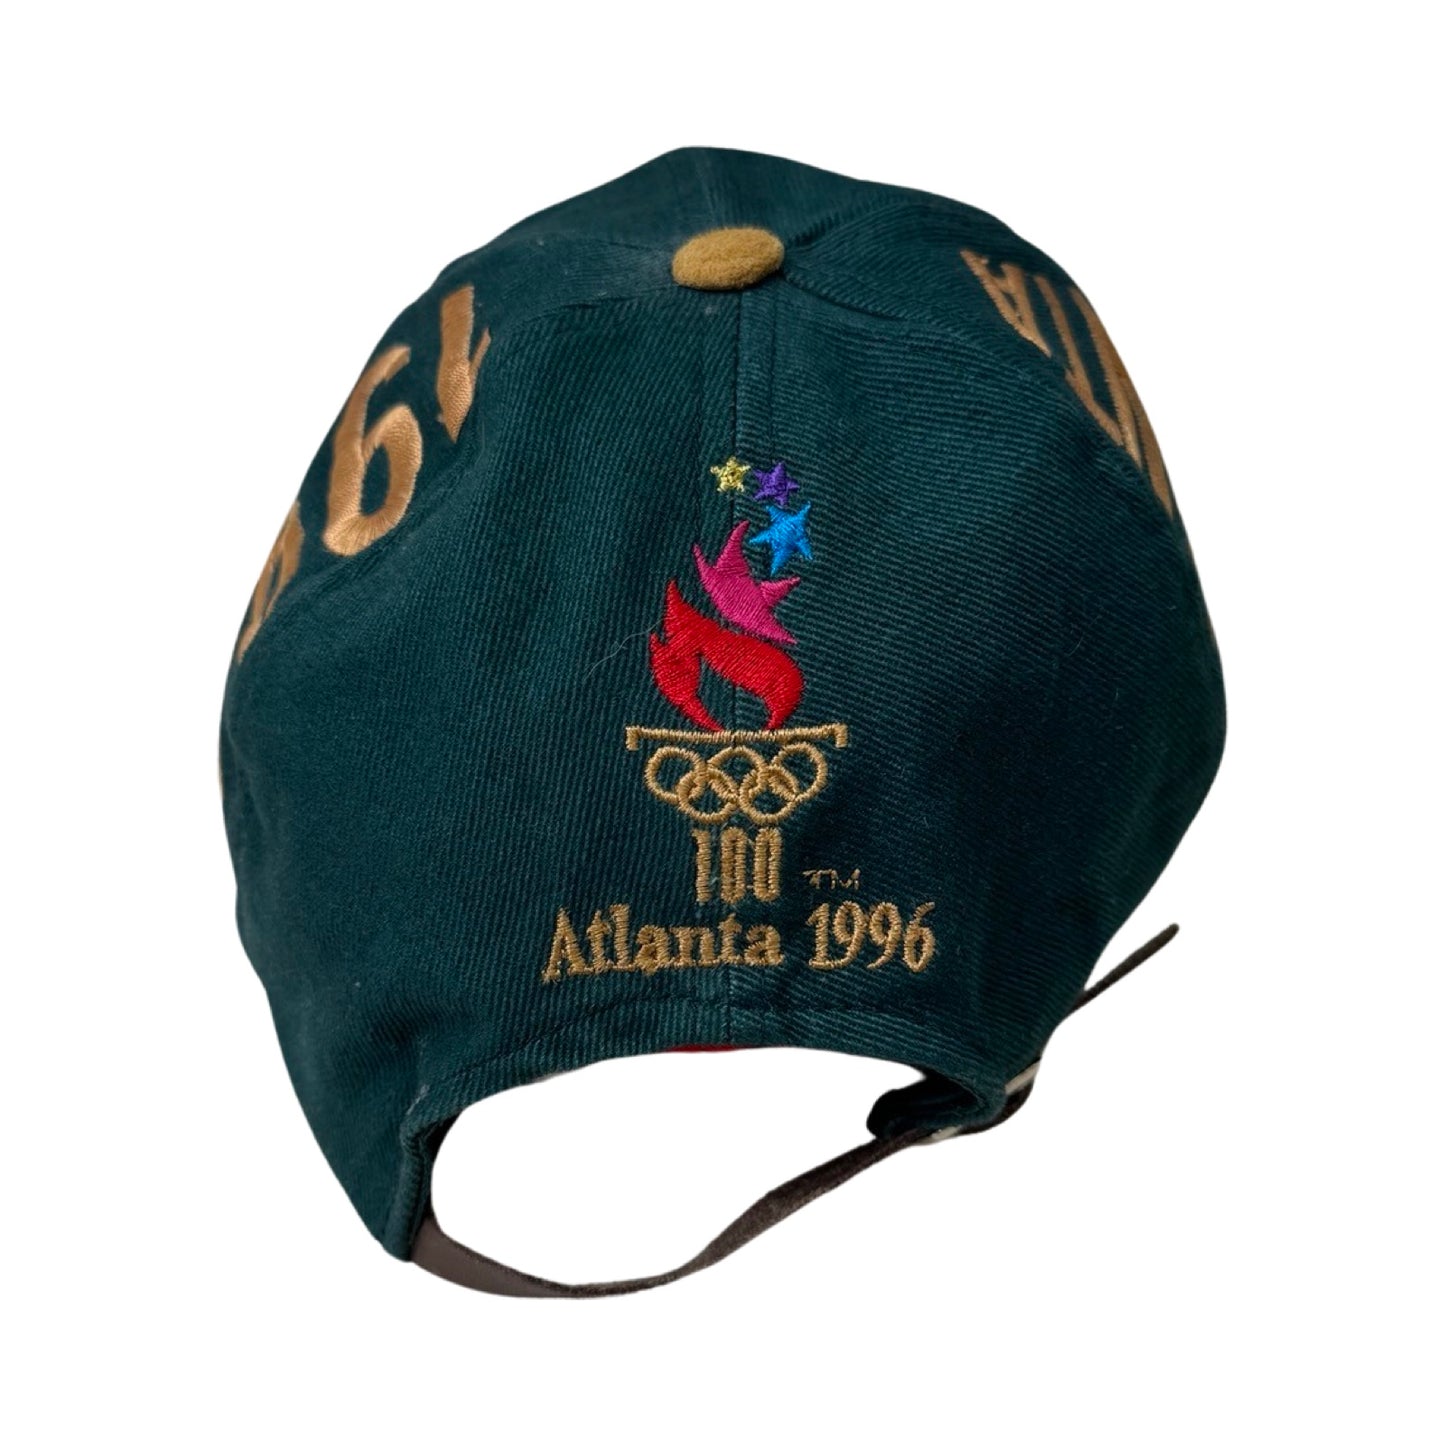 Vintage 1996 Atlanta Olympics Snapback